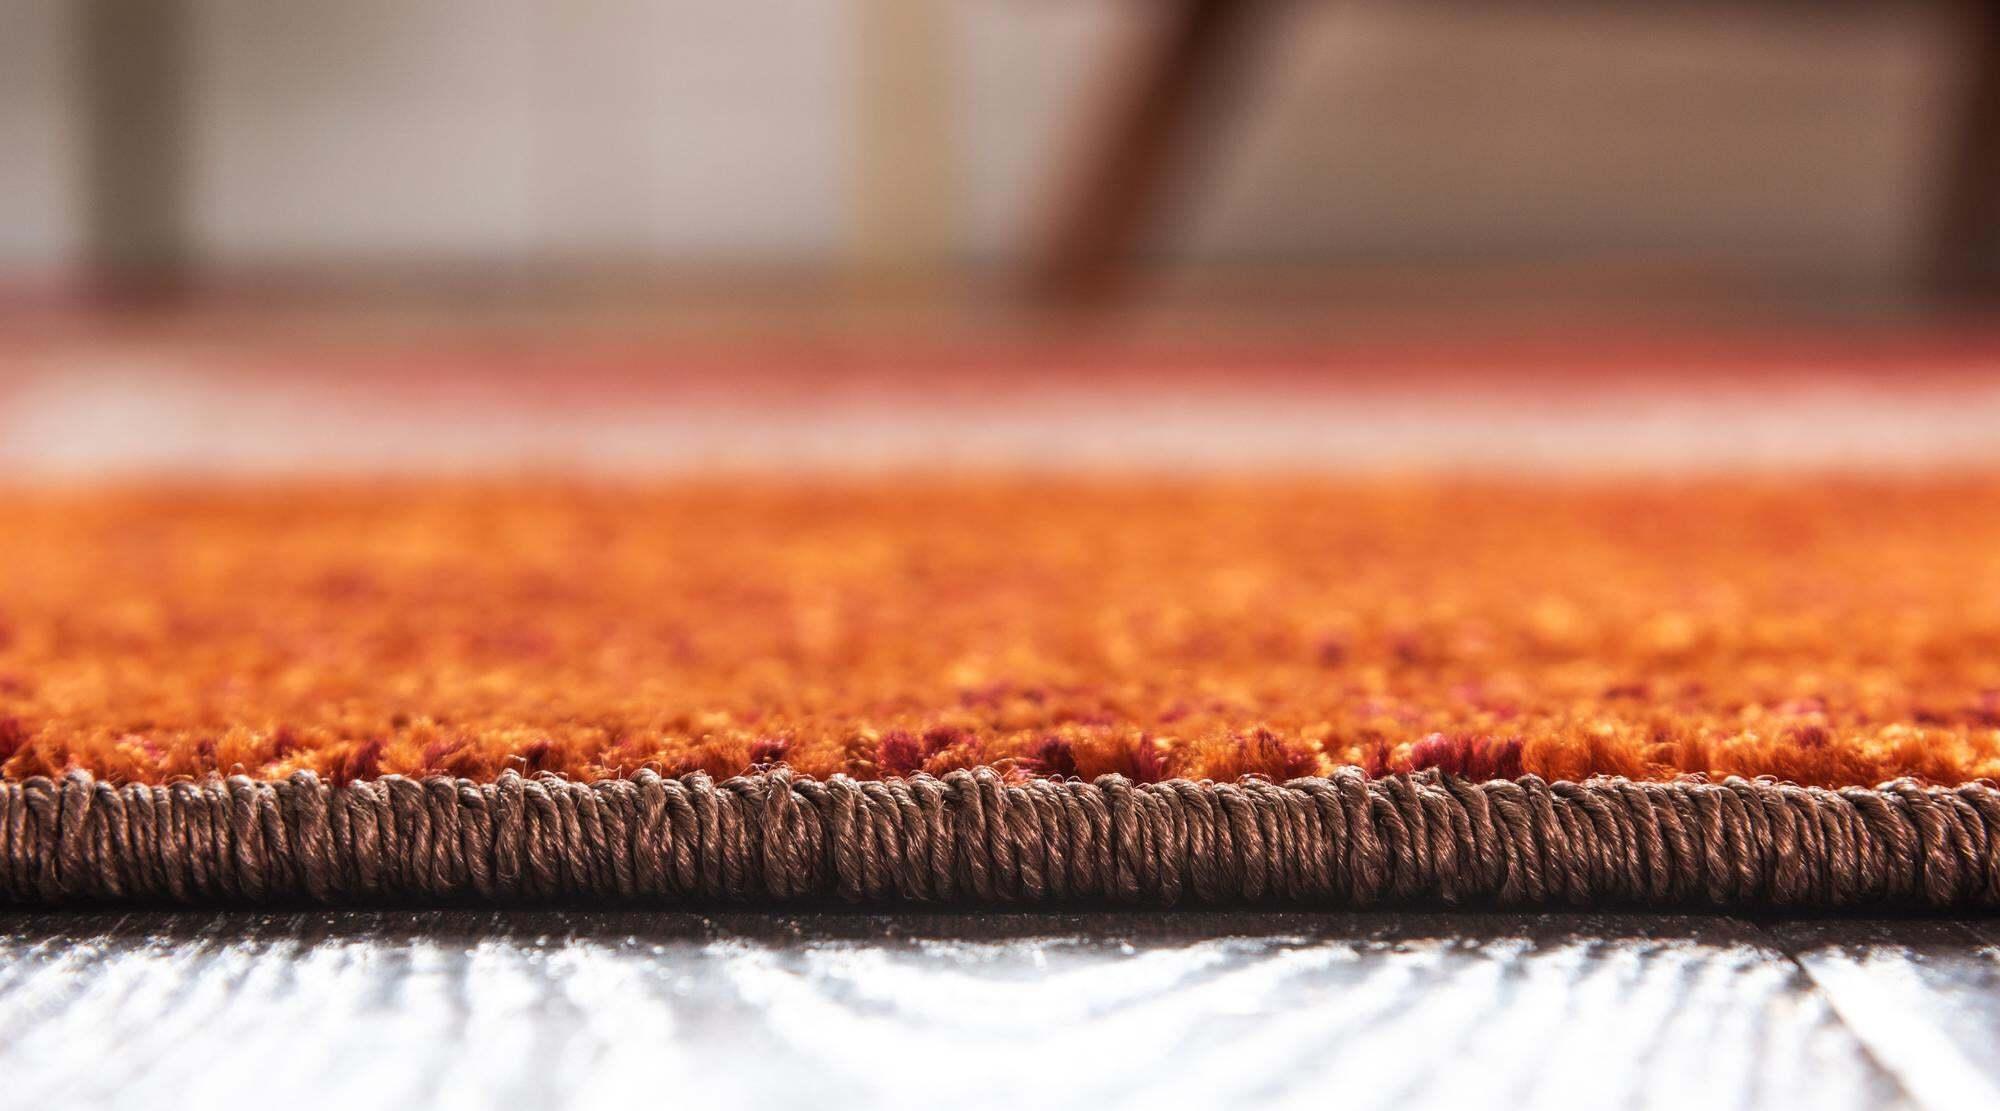 Unique Loom Indoor Rugs - Autumn 5x8 Rug Multicolor